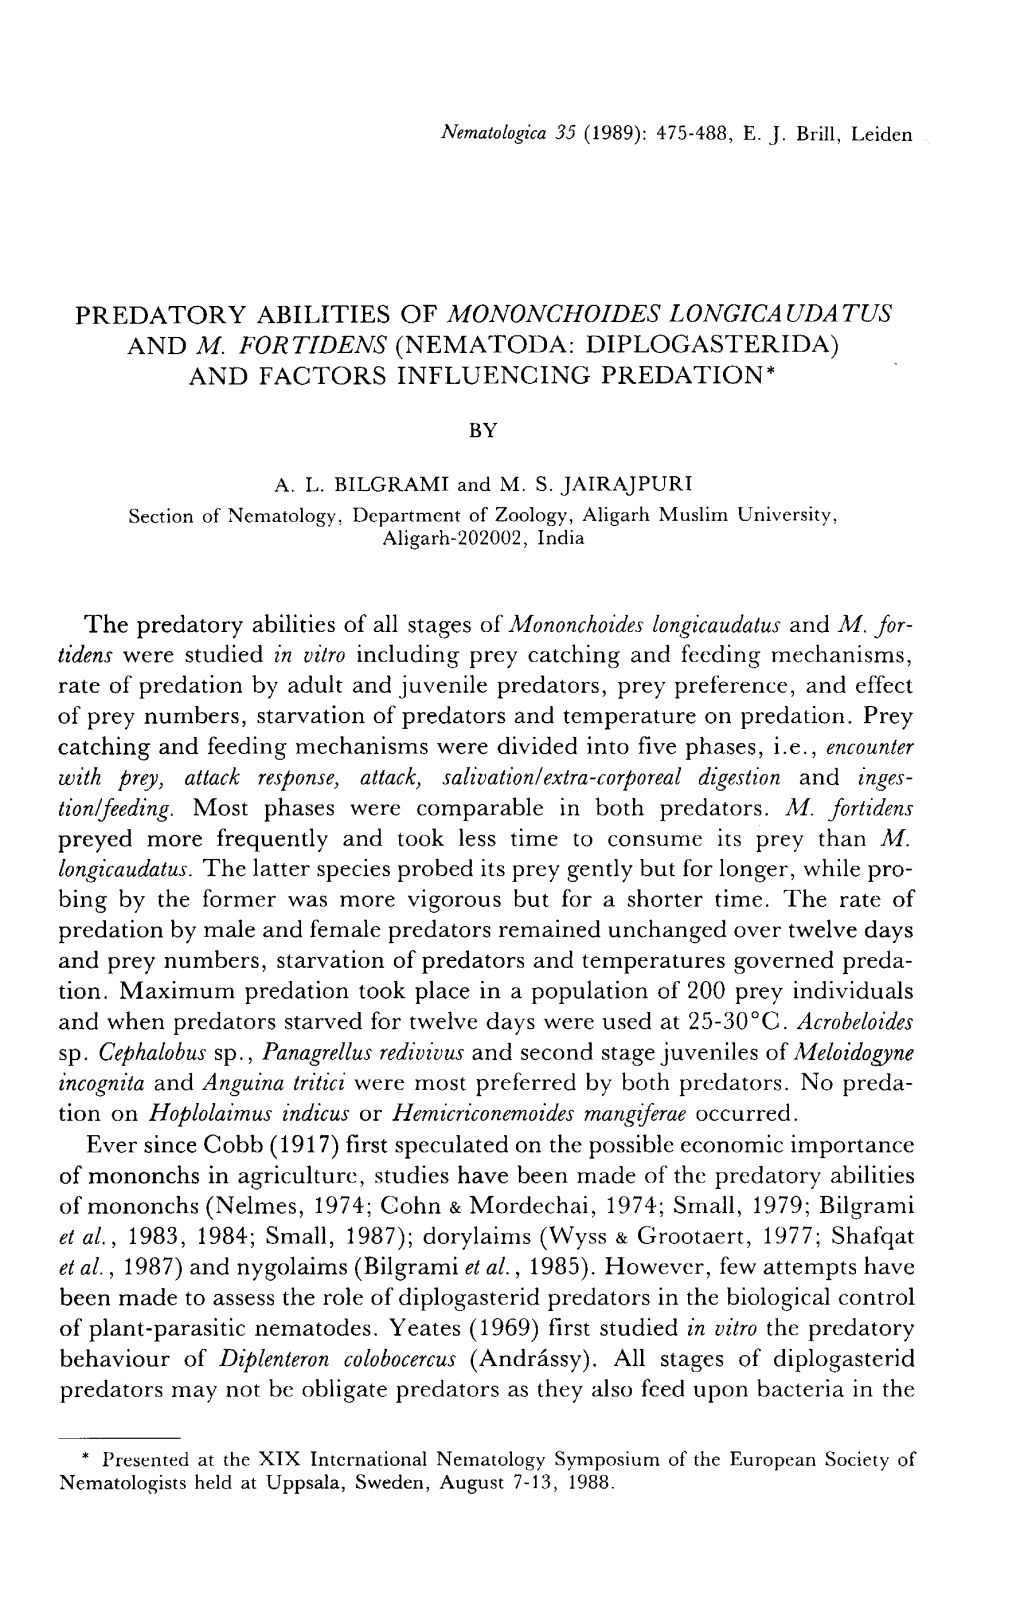 Predatory Abilities of Mononchoides Longicaudatus and M. Fortidens (Nematoda: Diplogasterida) and Factors Influencing Predation*